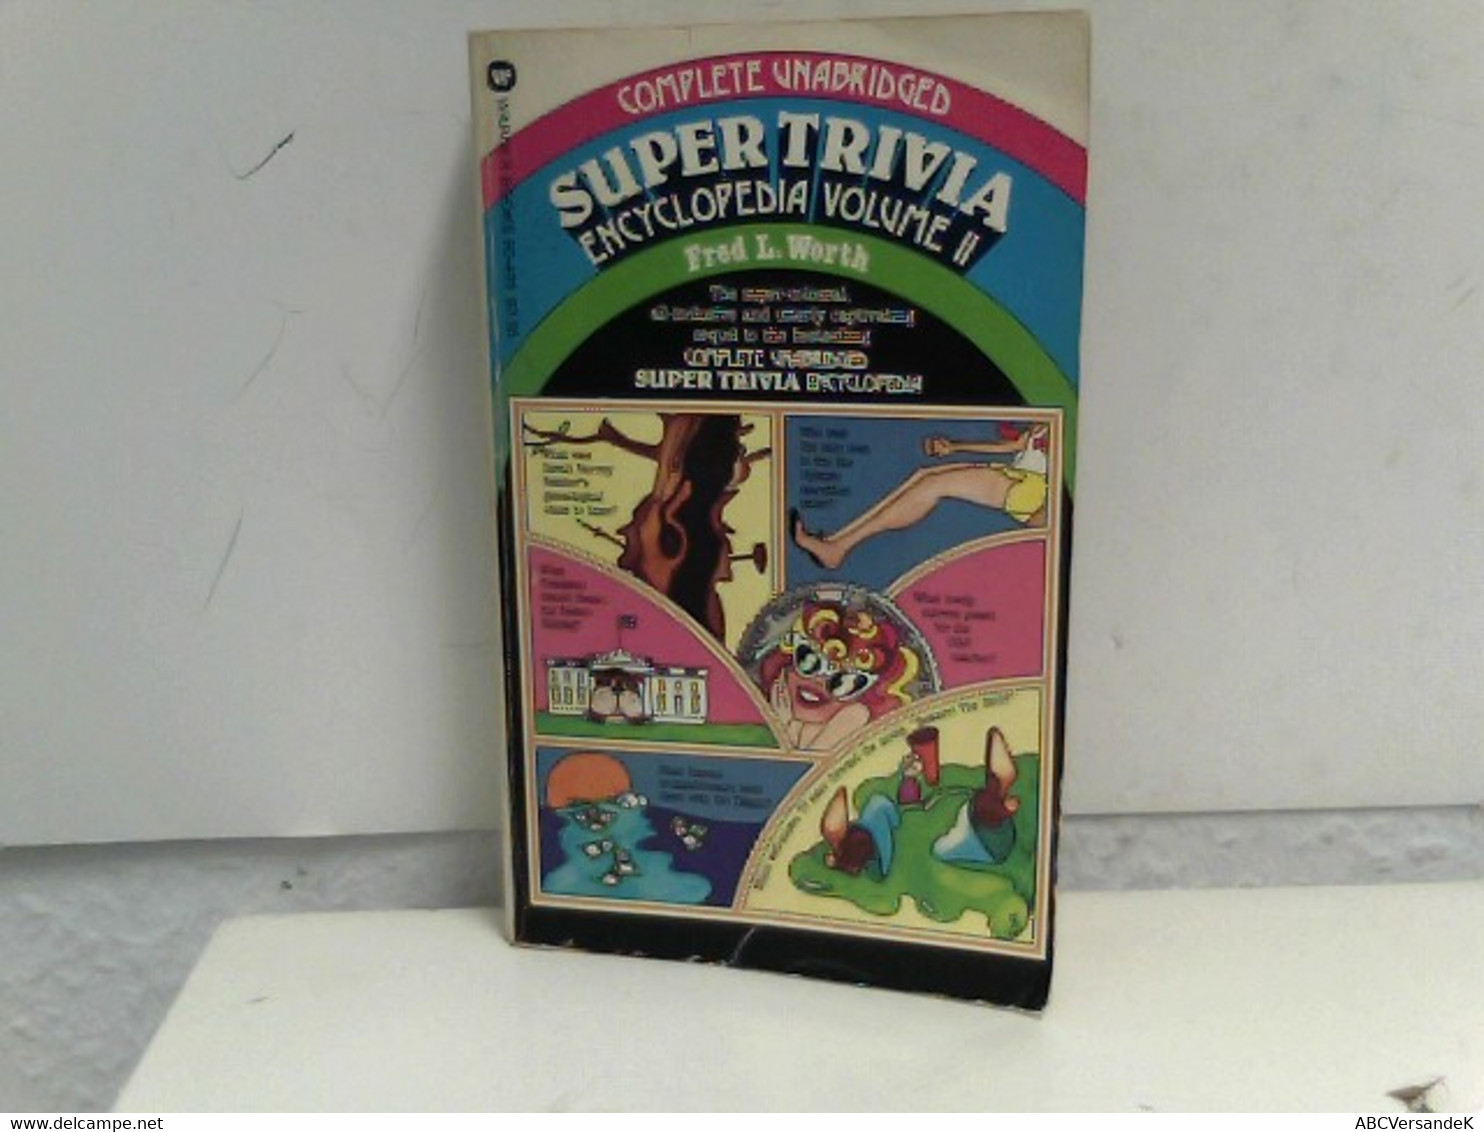 The Complete Unabridged Super Trivia Encyclopedia Volume II. - Lexicons